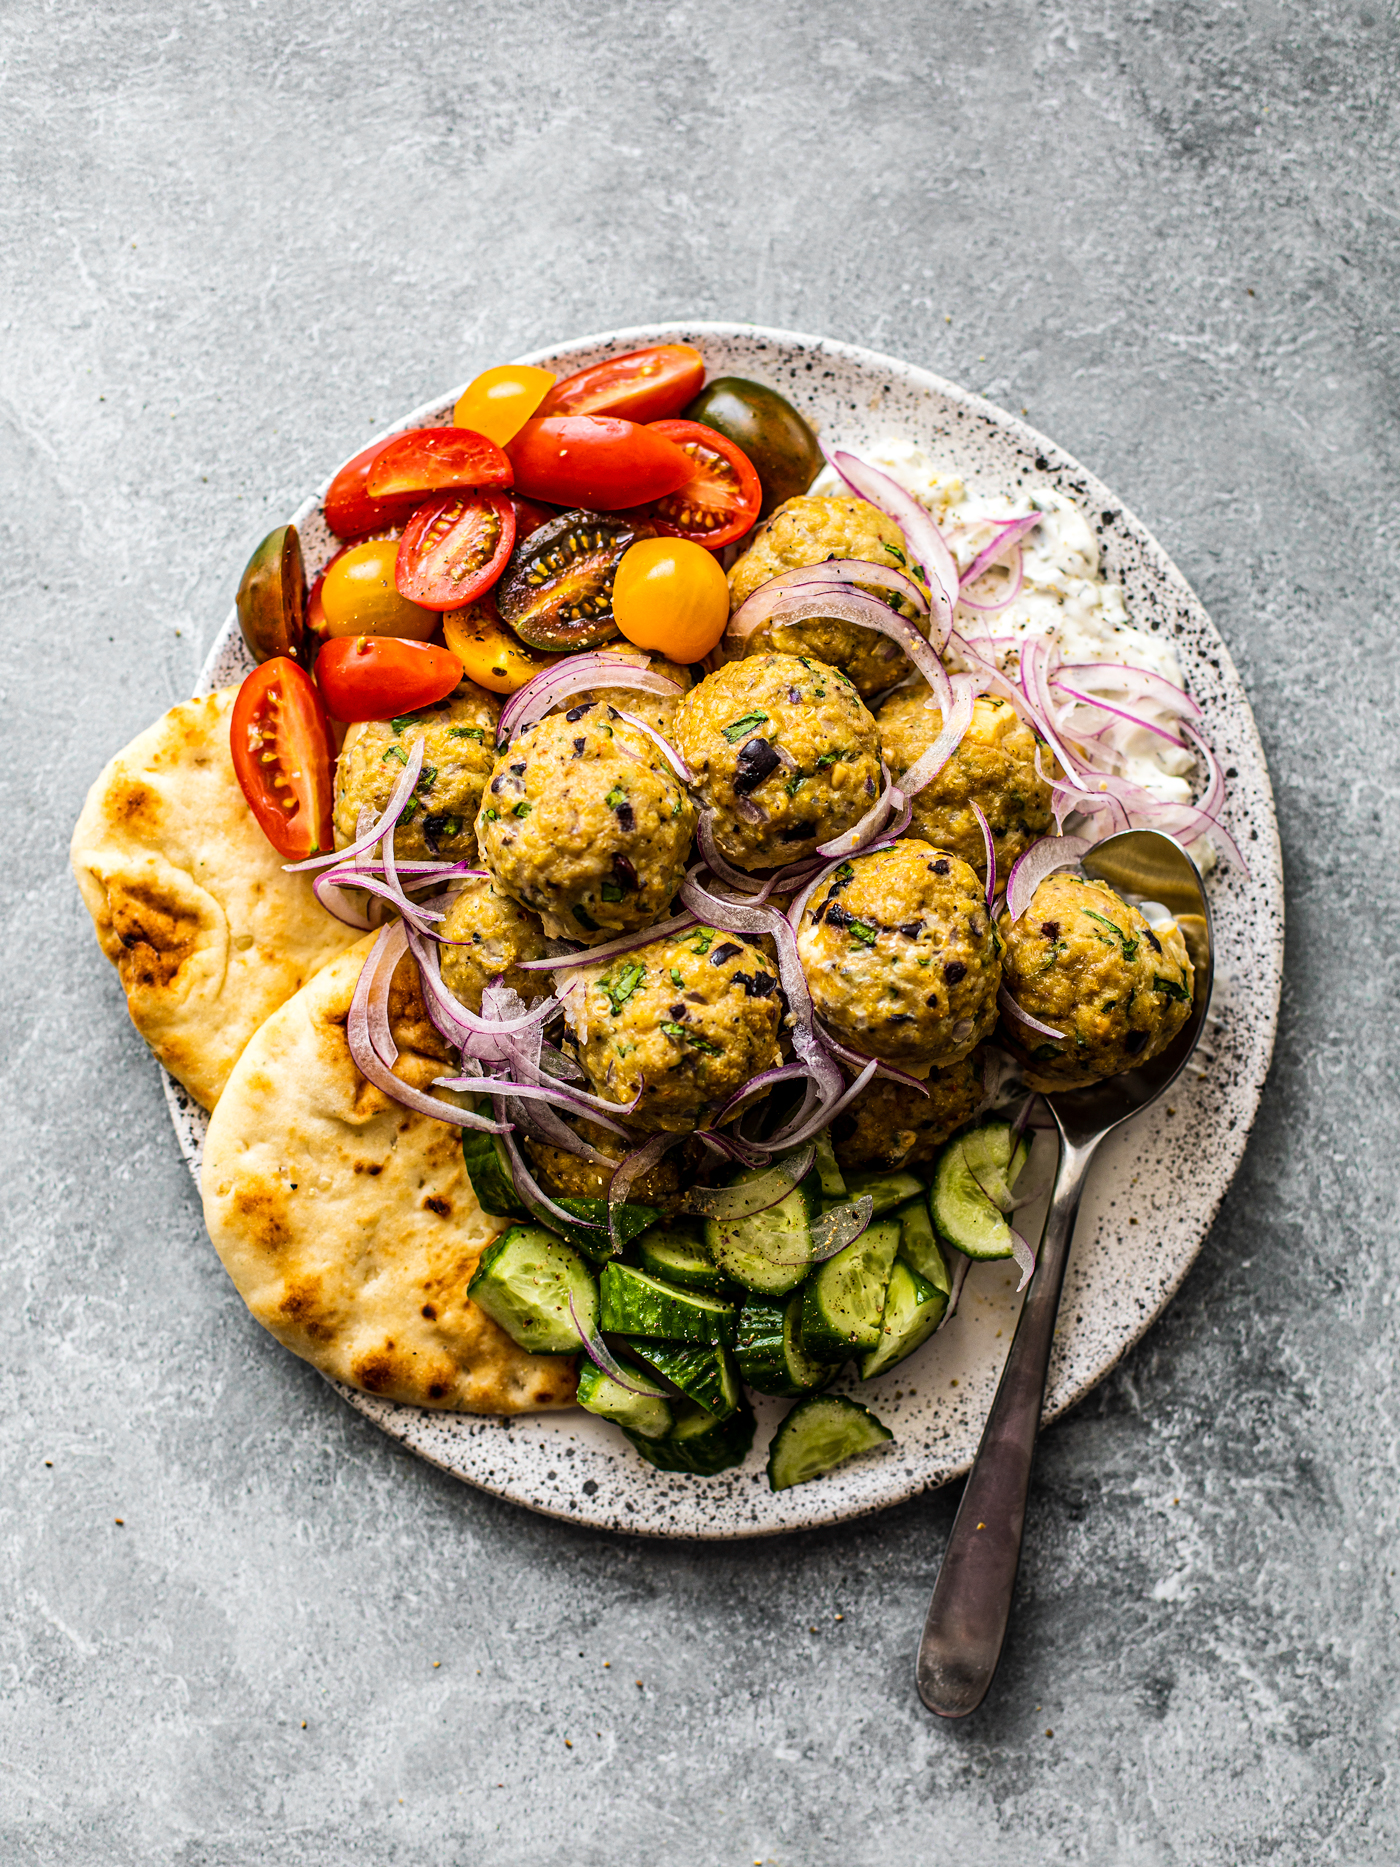 Meatballs on a serving platter with tzatziki, fresh veggies, and pita.